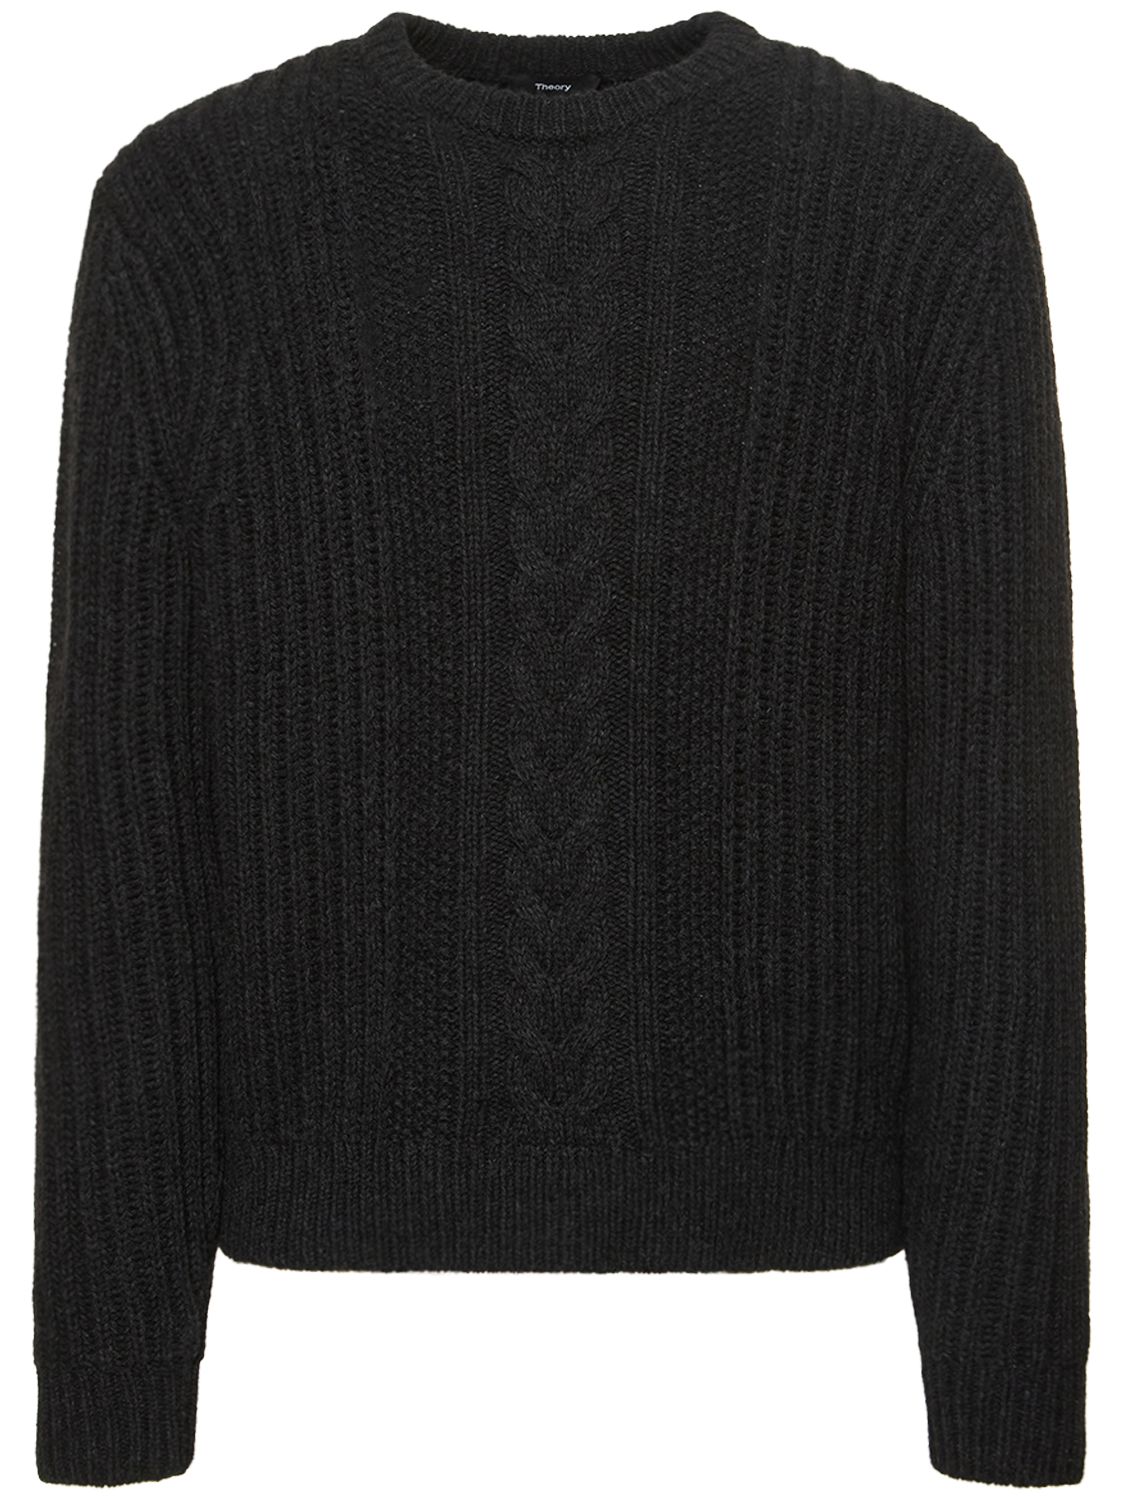 Vilare Wool Blend Knit Crewneck Sweater